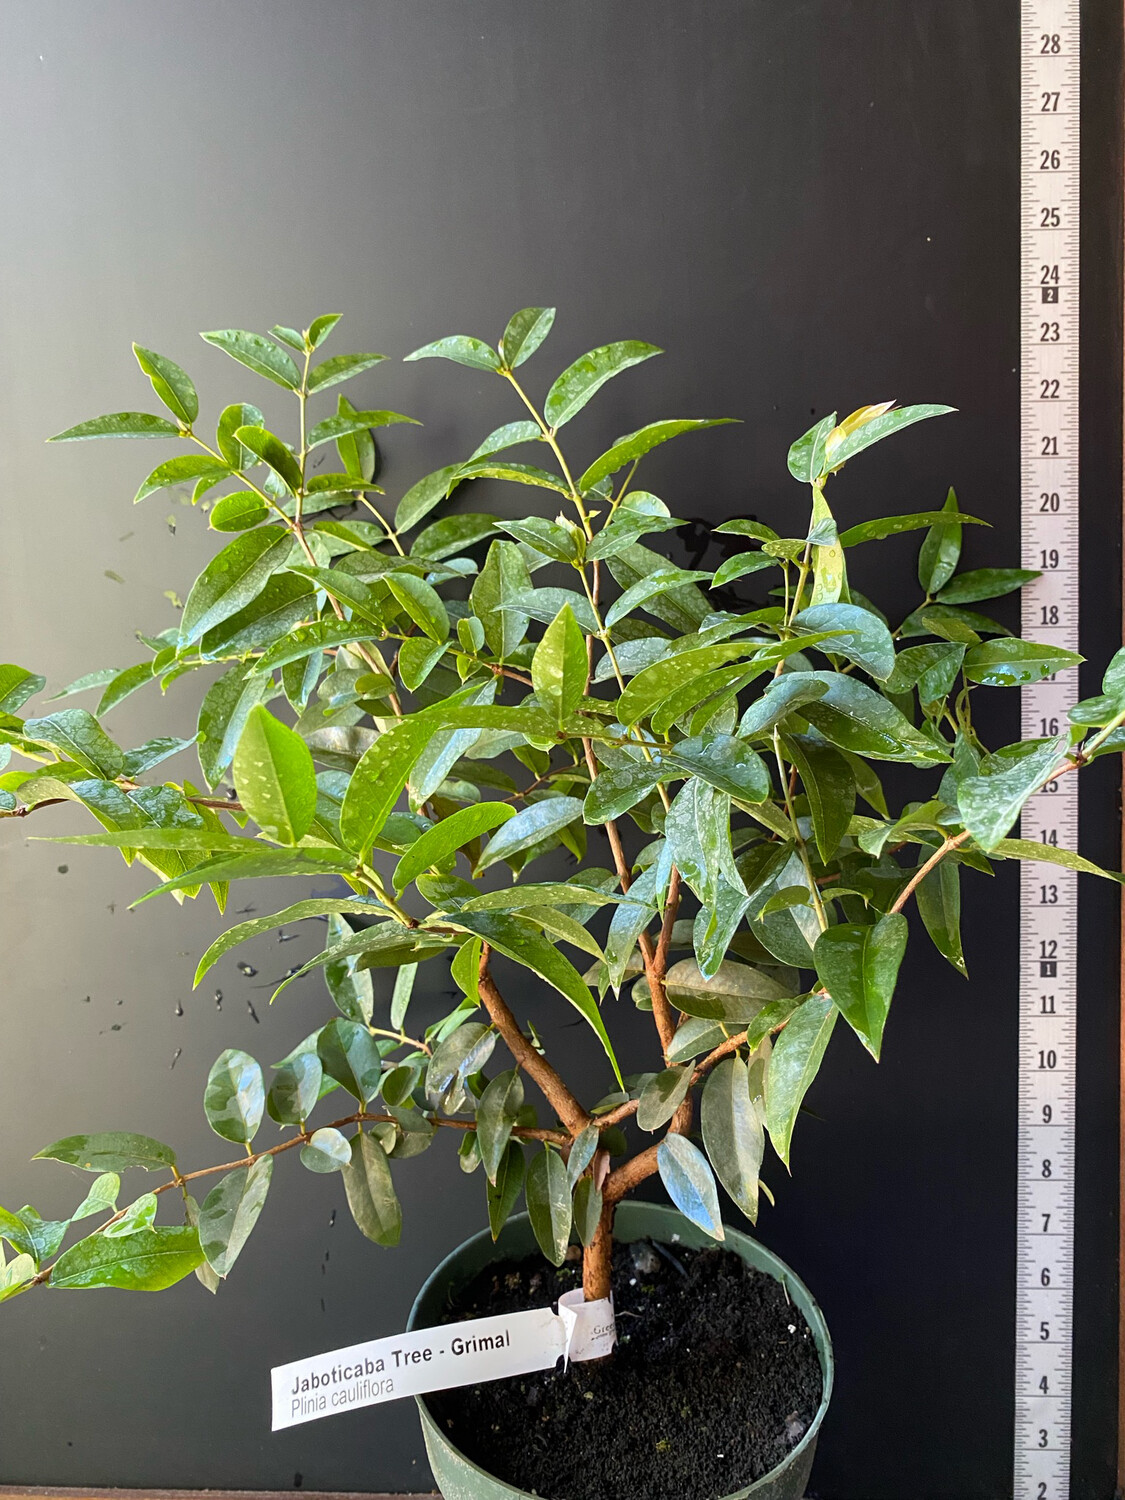 Jaboticaba Tree - Grimal (Plinia cauliflora) 1G